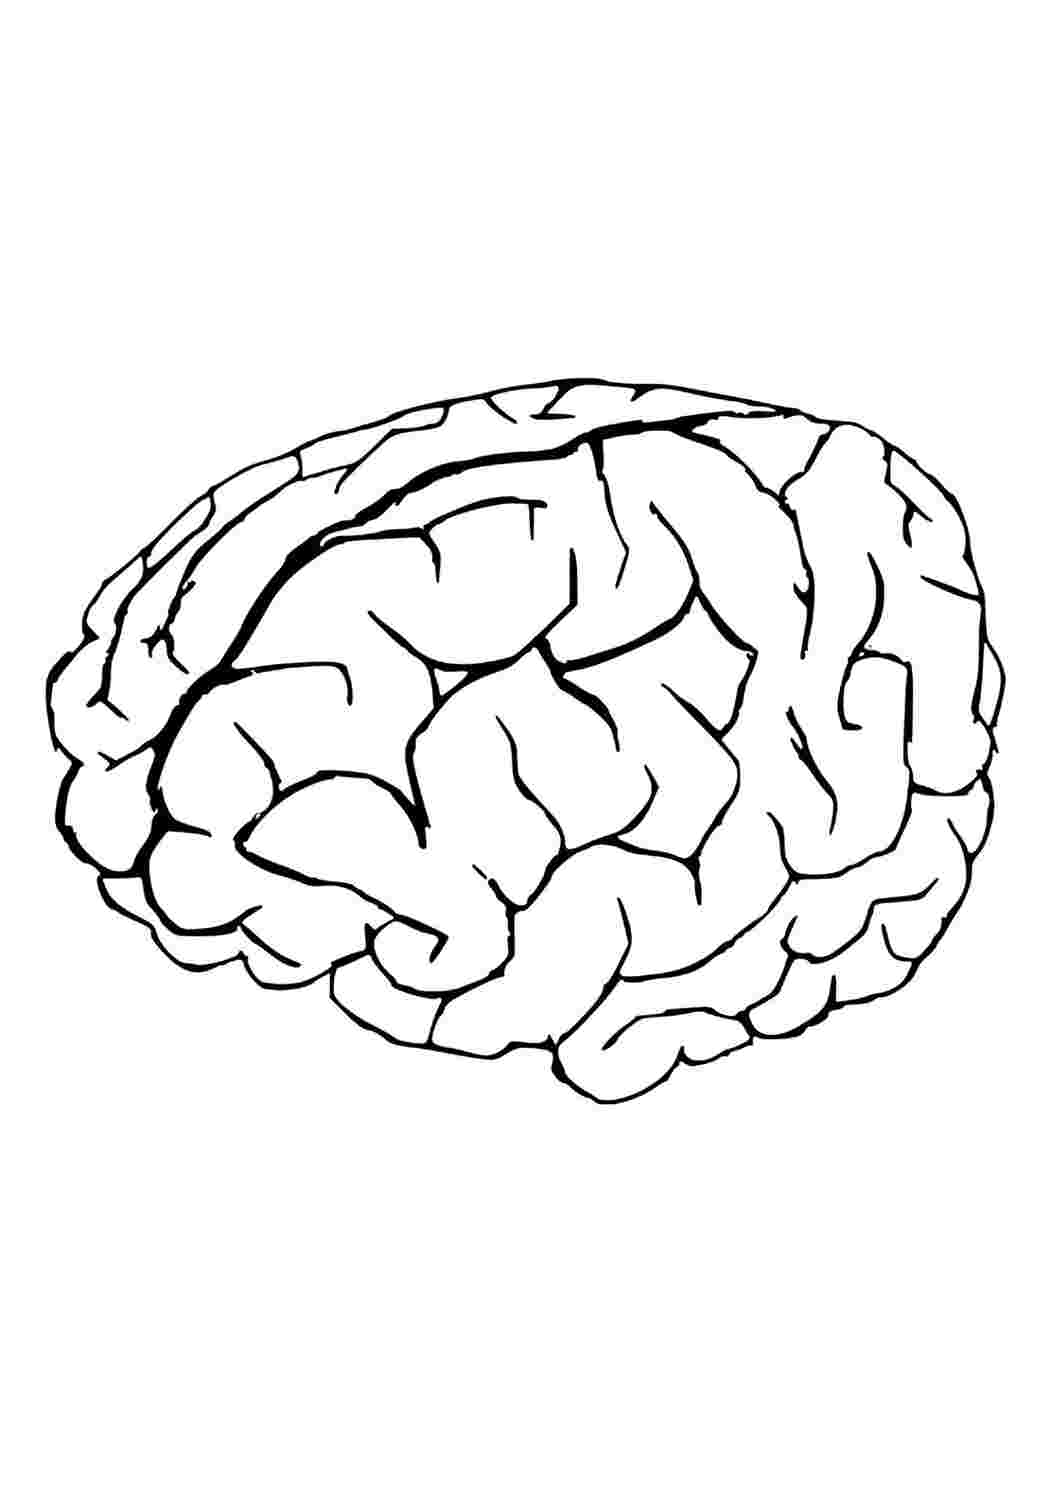 R brain. Мозг раскраска. Раскраска мозг человека для детей. Раскраски развивающие мозг. Optimus Brain raskraska.